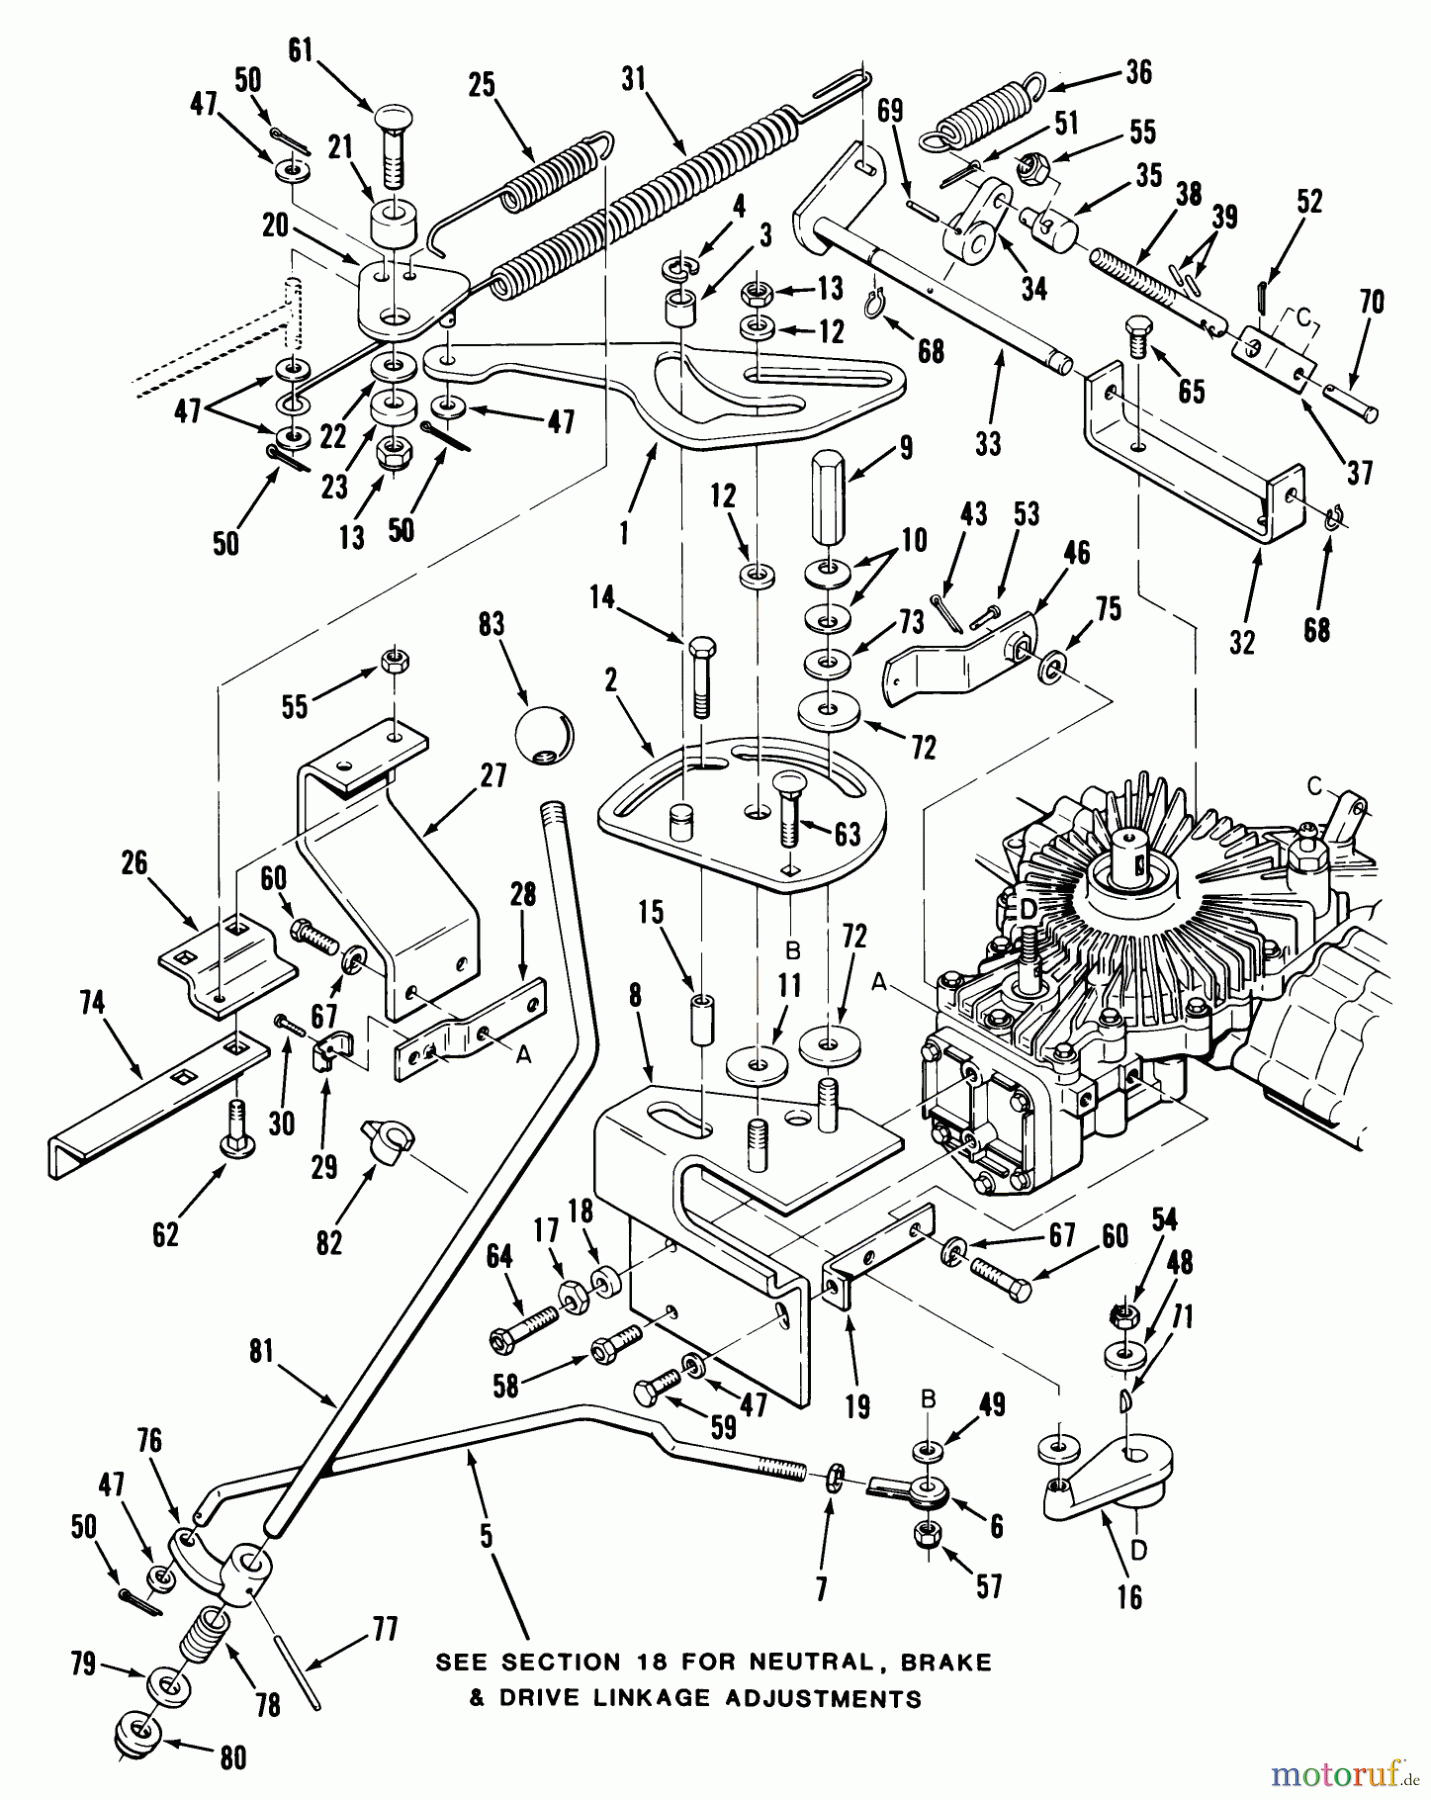  Toro Neu Mowers, Lawn & Garden Tractor Seite 1 32-11B403 (211-4) - Toro 211-4 Tractor, 1989 HYDROSTATIC TRANSAXLE-CONTROL LINKAGE